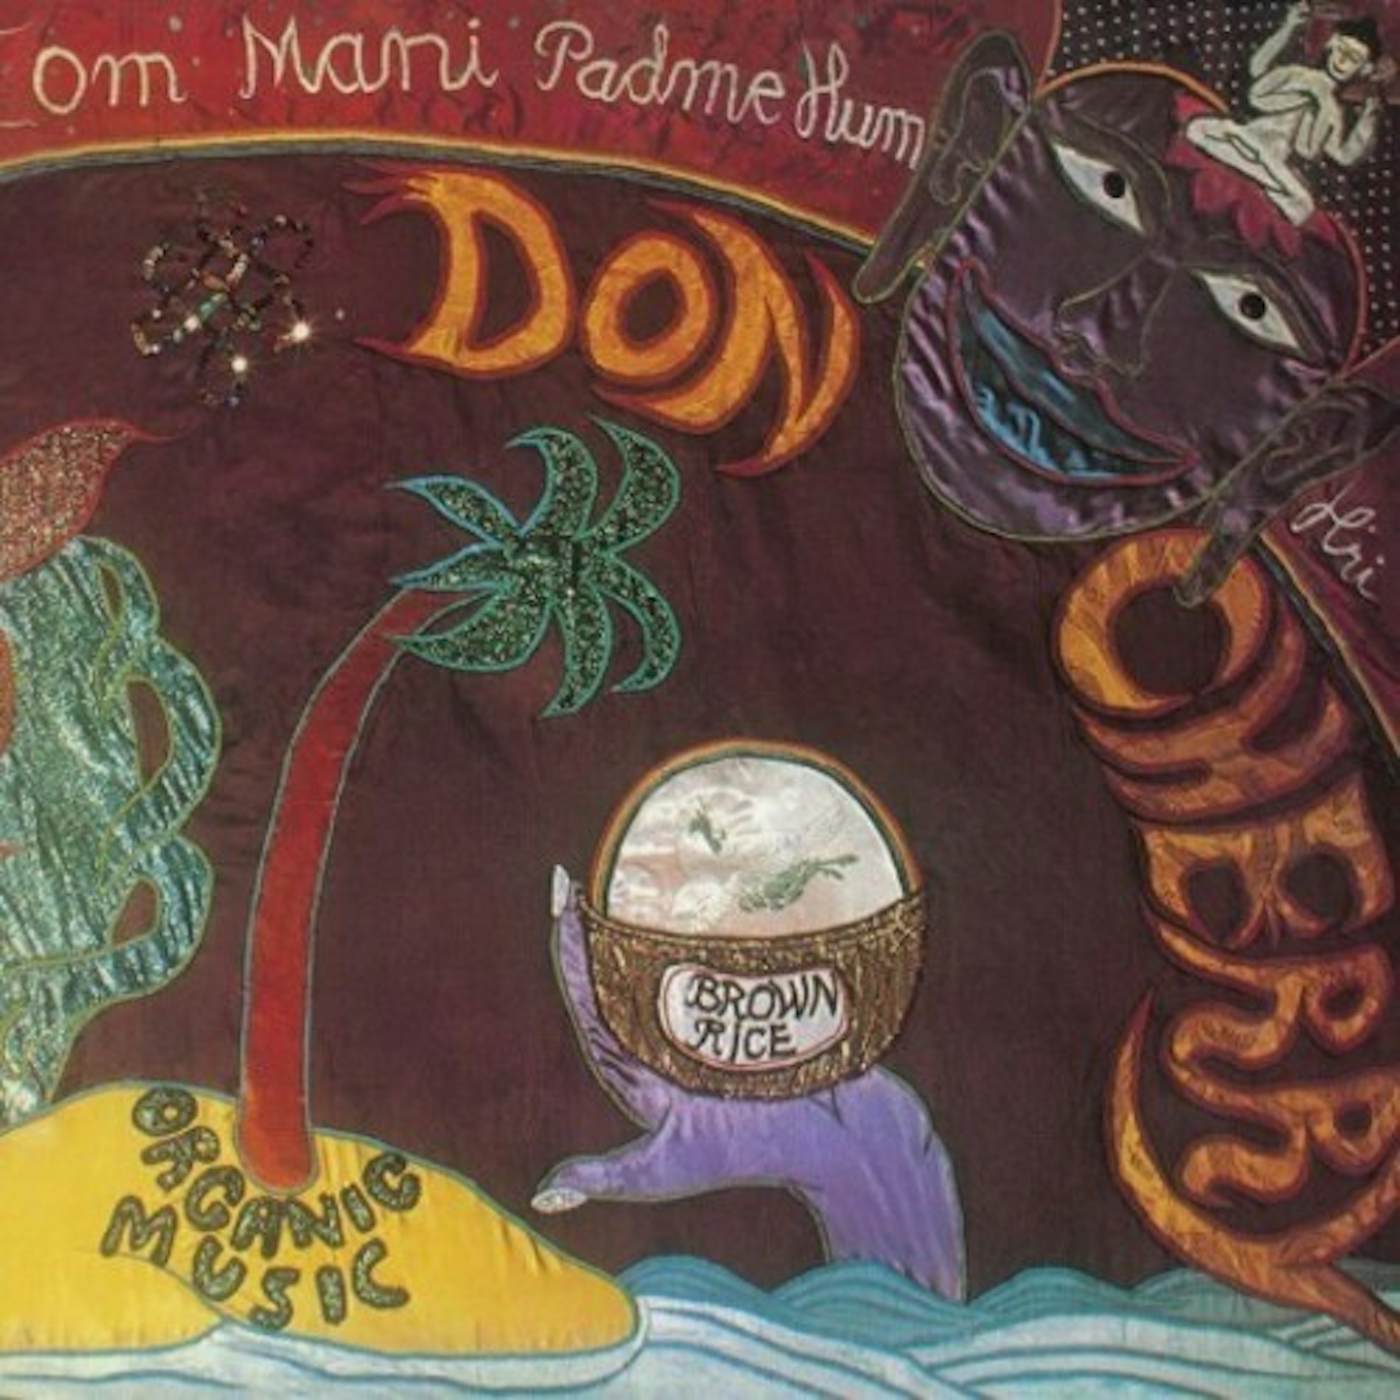 Don Cherry Brown Rice Vinyl Record